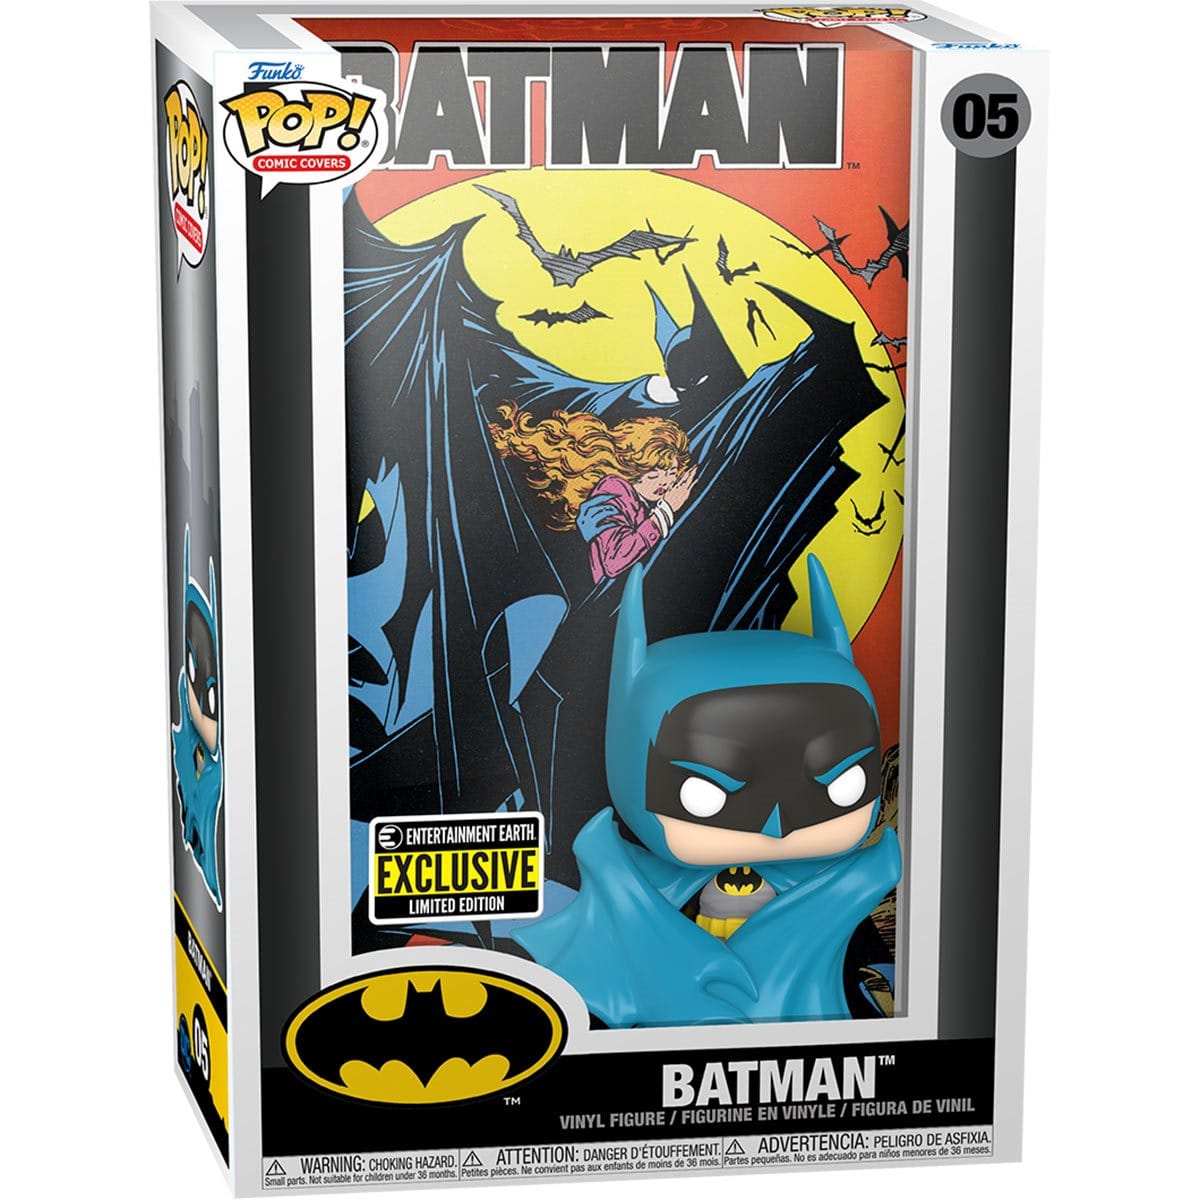 Funko Pop DC Comics Batman #423 McFarlane Pop! Comic Cover Figure with Case - Exclusive - Pop-O-Loco - Funko